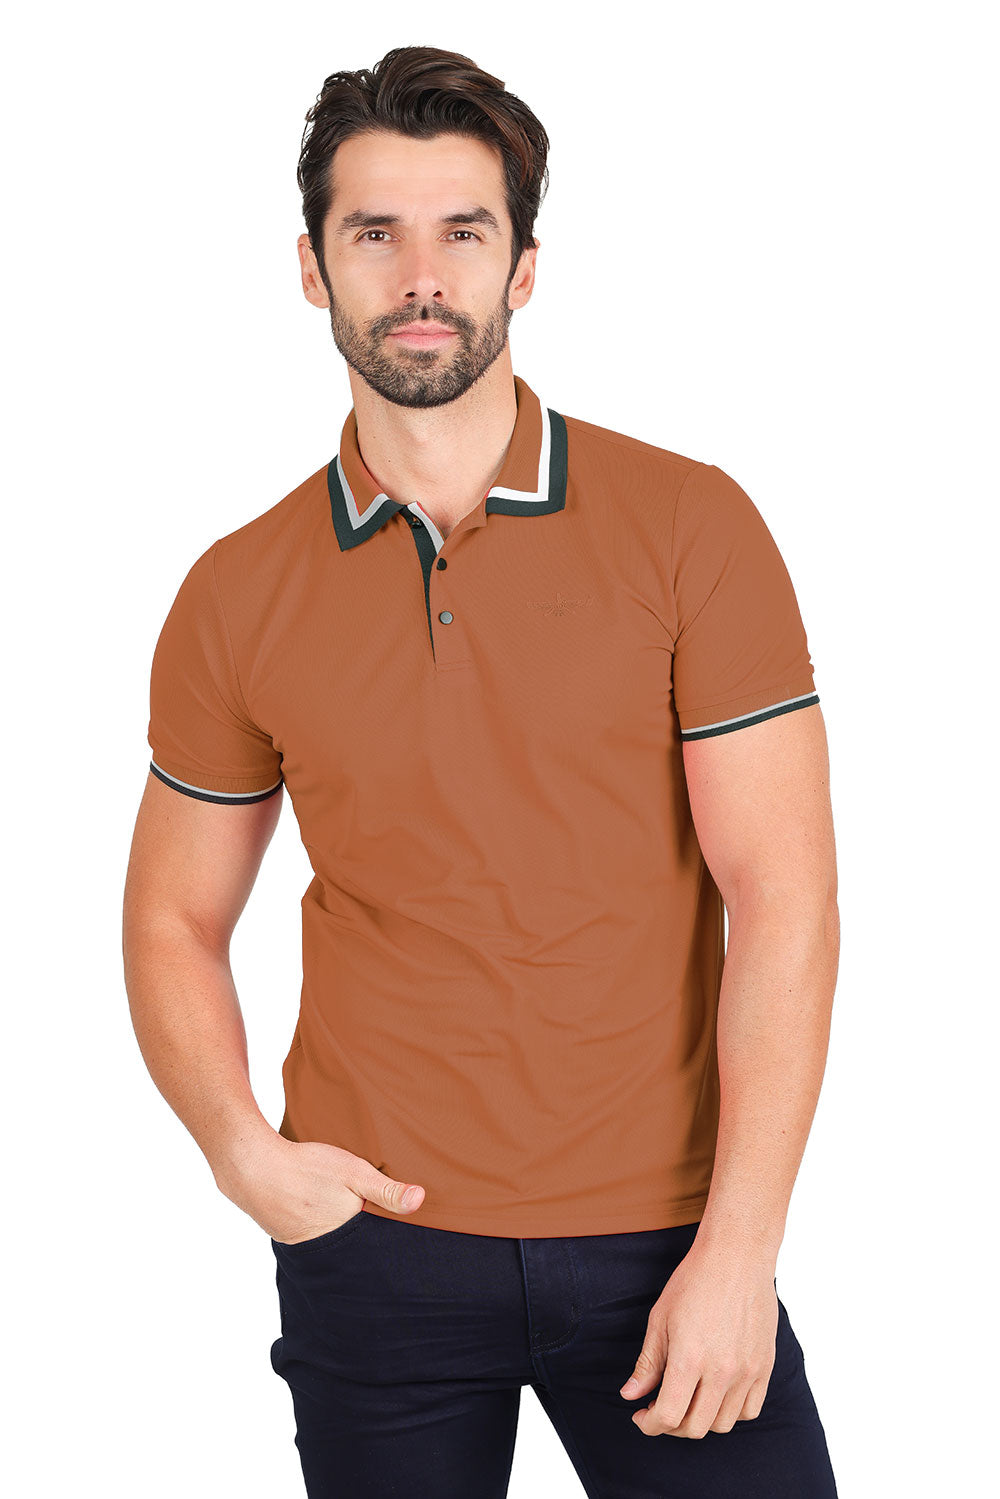 Barabas Men's Solid Color Cotton Short Sleeve Polo Shirts 3PS125 Dark Brown